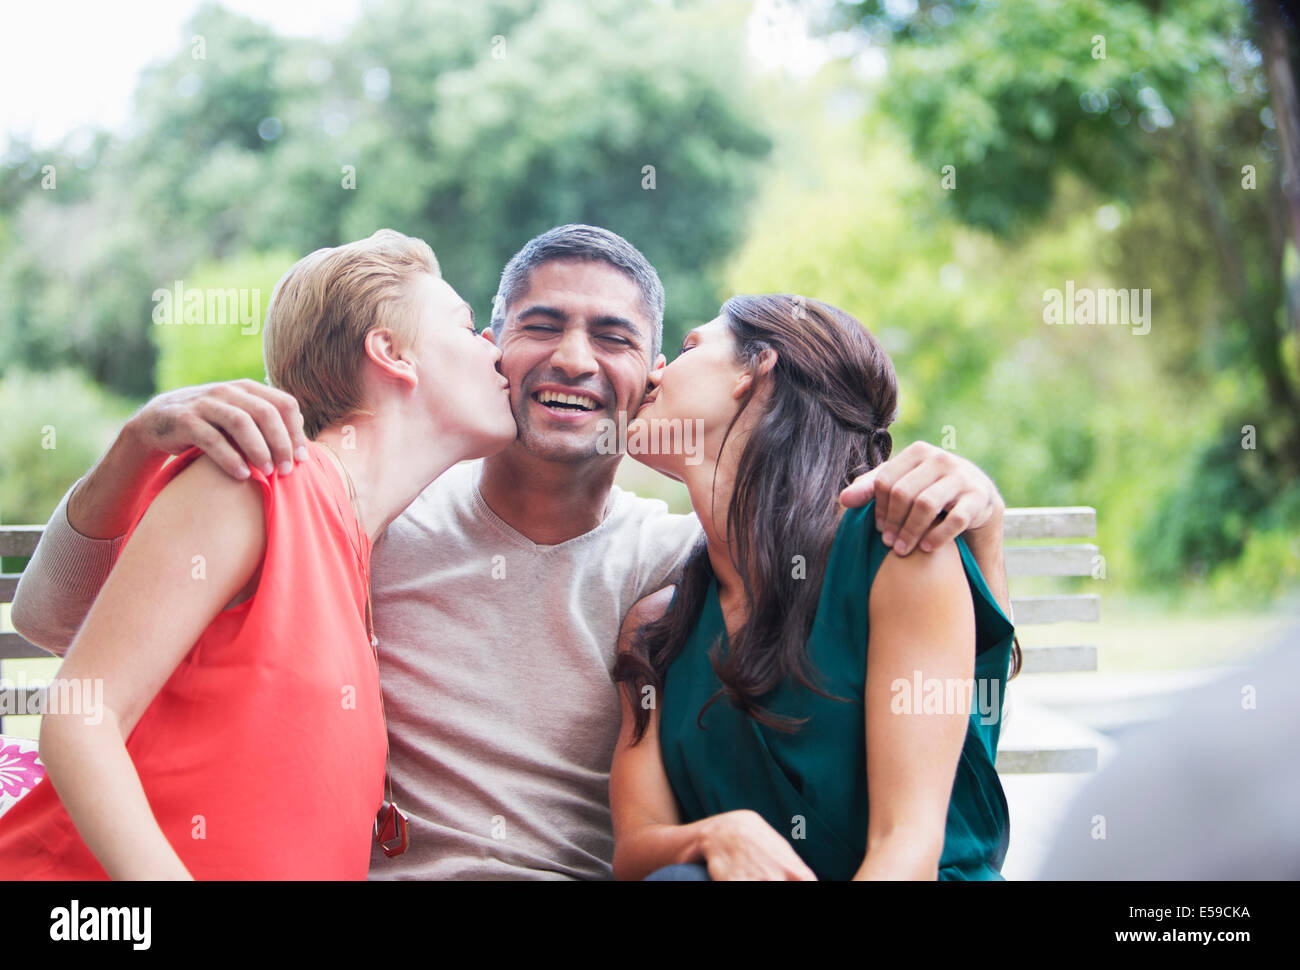 Women kissing man’s cheeks outdoors Stock Photo